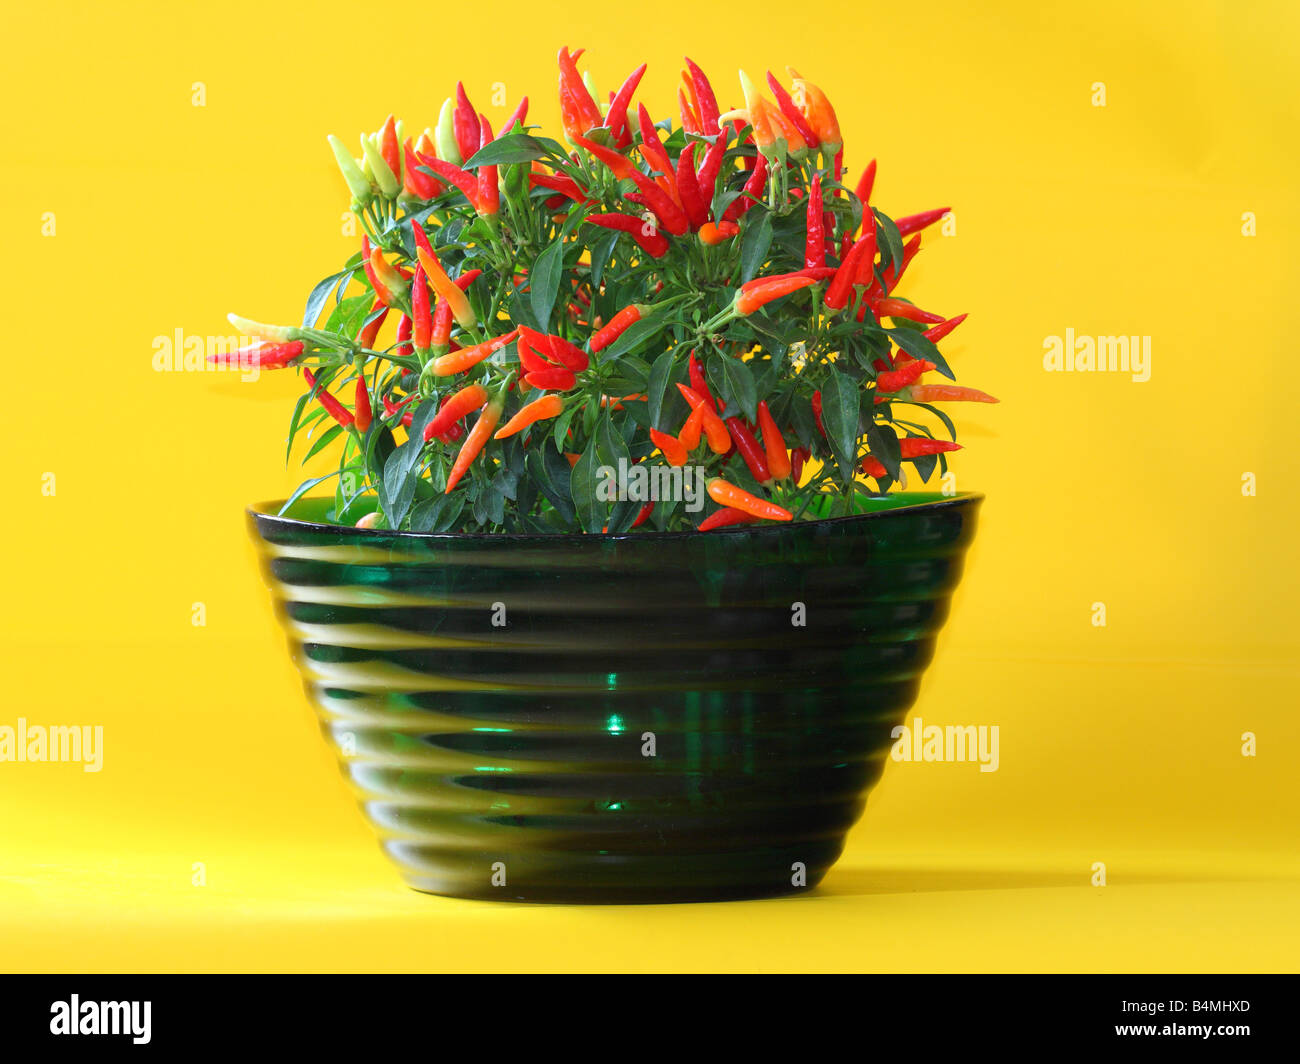 Paprica shrub fruiting Stock Photo